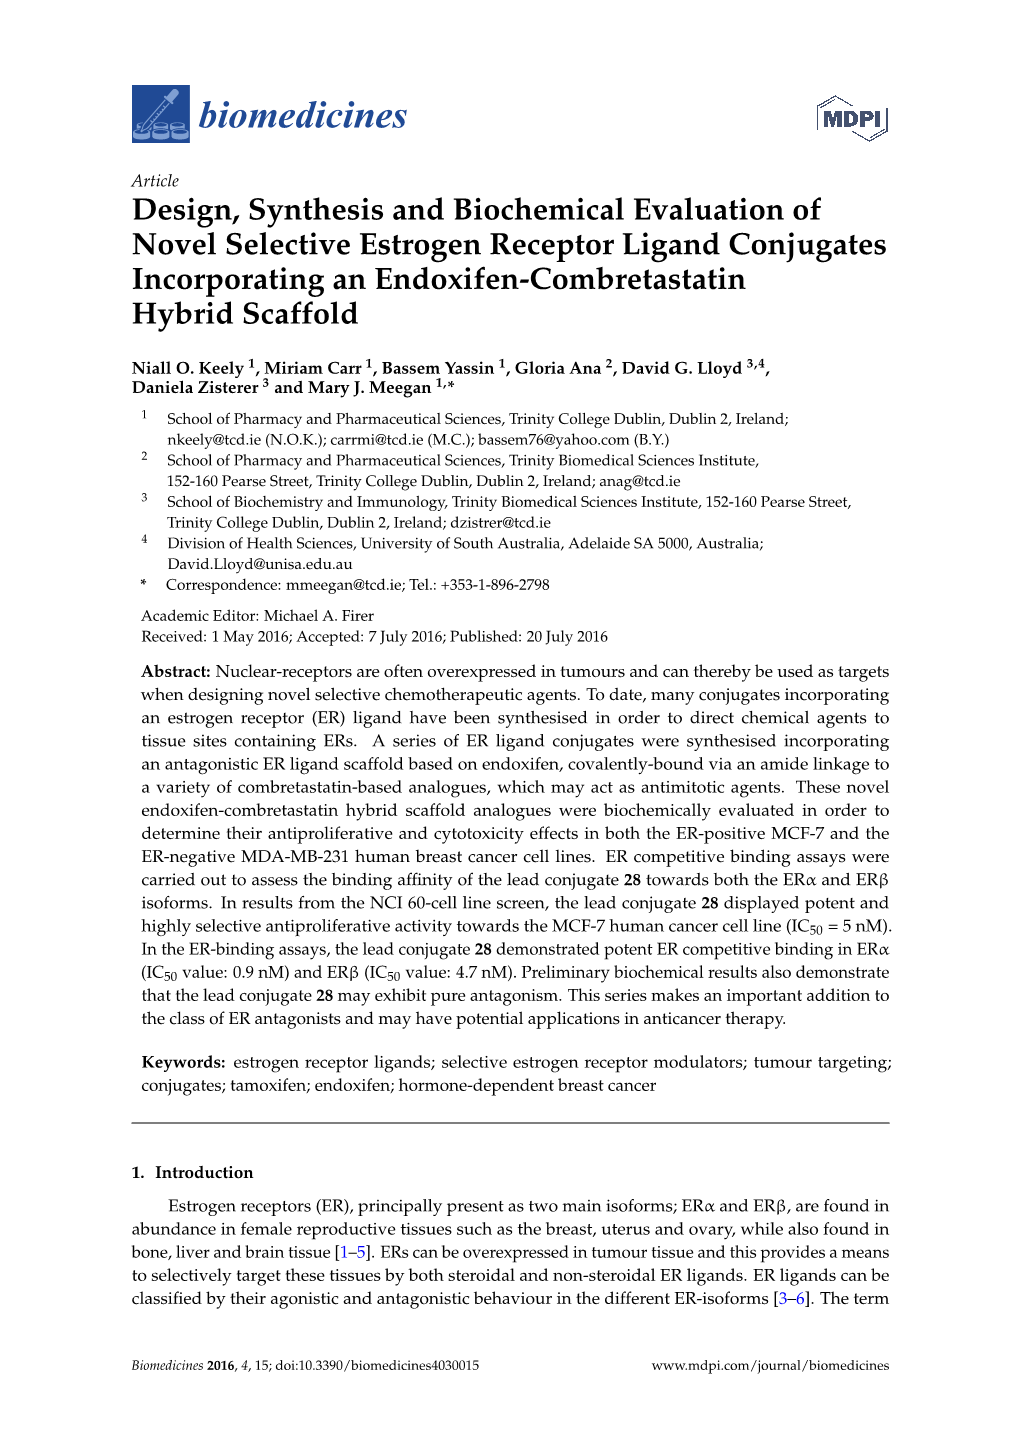 Design, Synthesis and Biochemical Evaluation of Novel Selective Estrogen Receptor Ligand Conjugates Incorporating an Endoxifen-Combretastatin Hybrid Scaffold